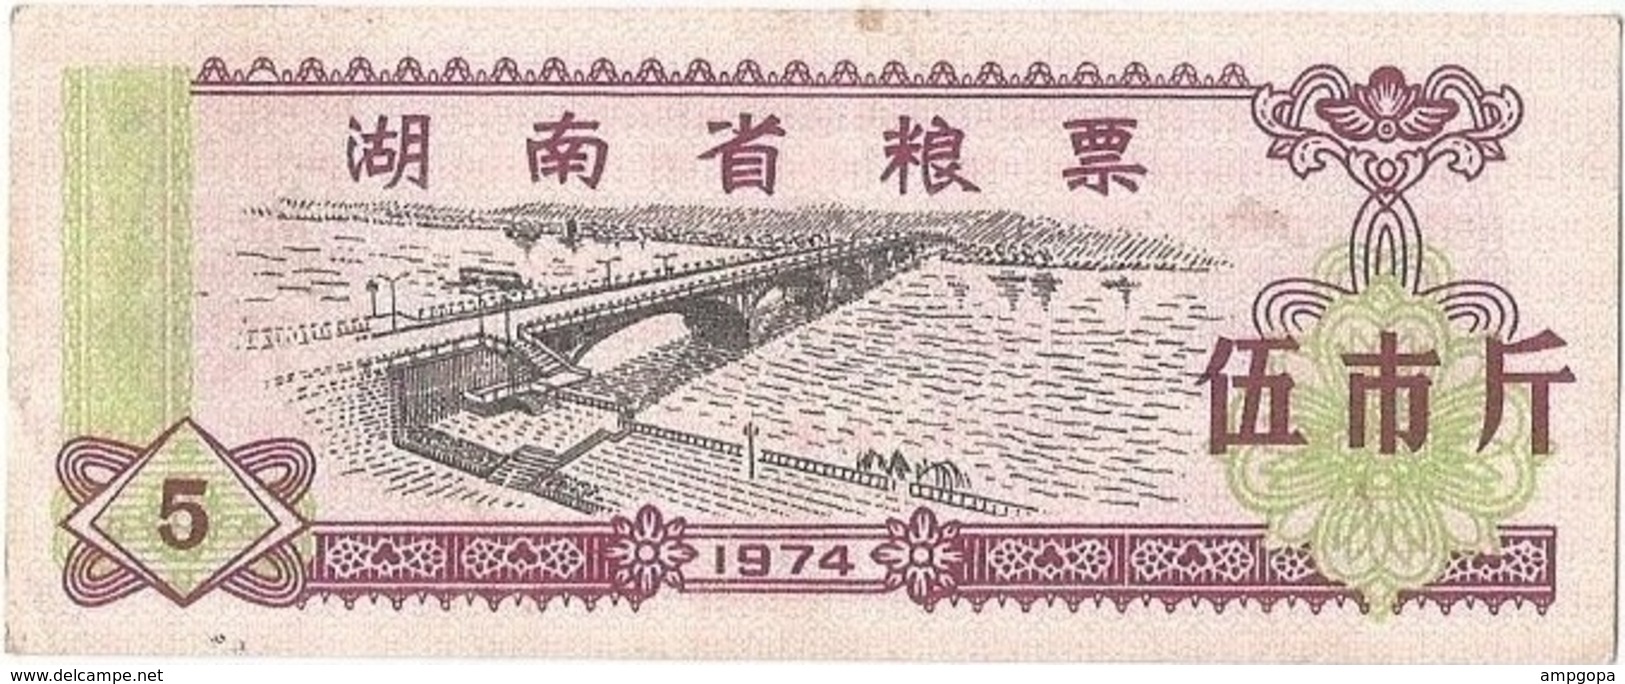 China 5 Jin Hunan 1974 Ref 371-1 UNC - China